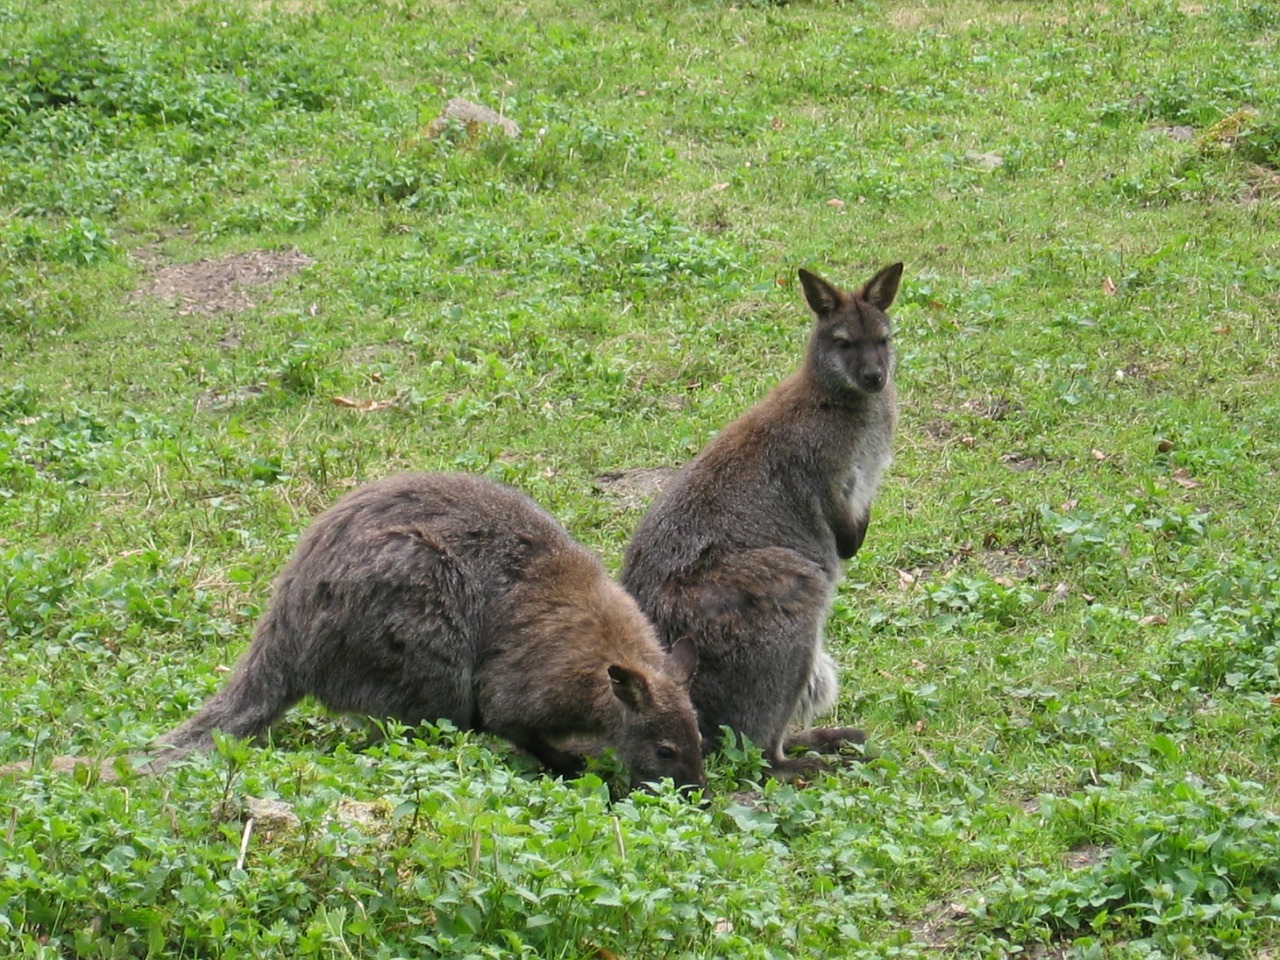 kangaroo wallaby wallabies free photo